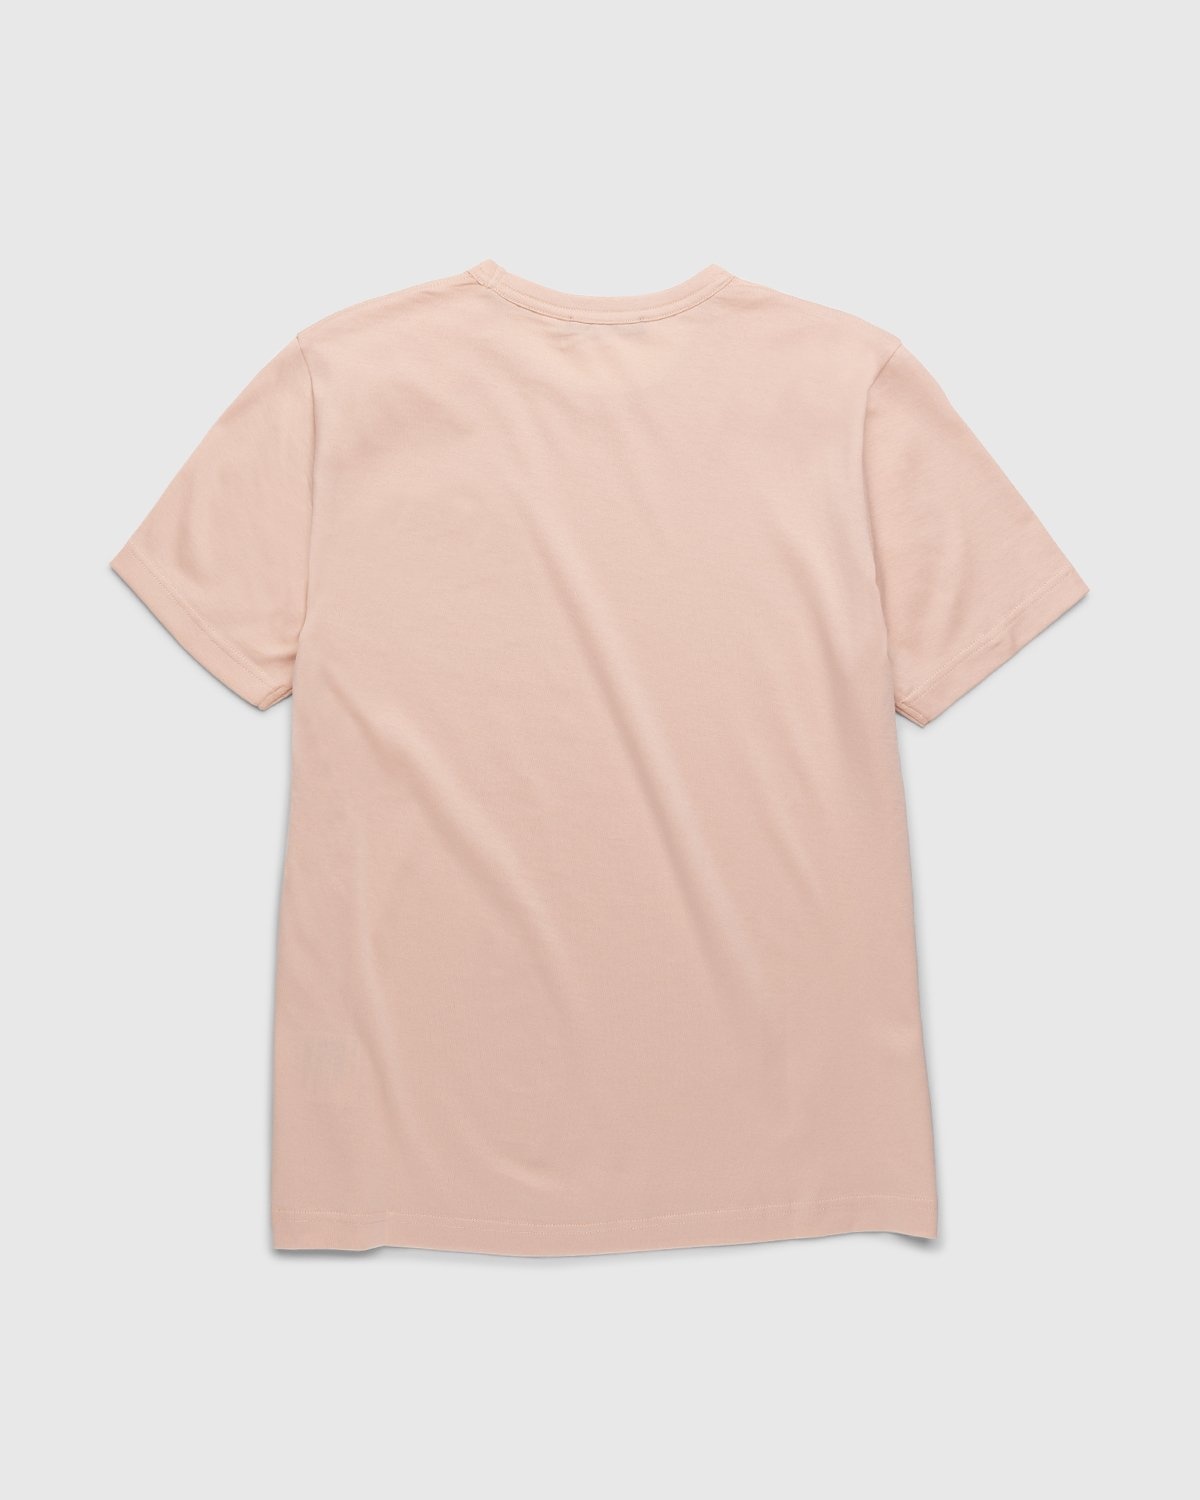 Acne Studios – Slim Fit T-Shirt Powder Pink - T-shirts - Pink - Image 2